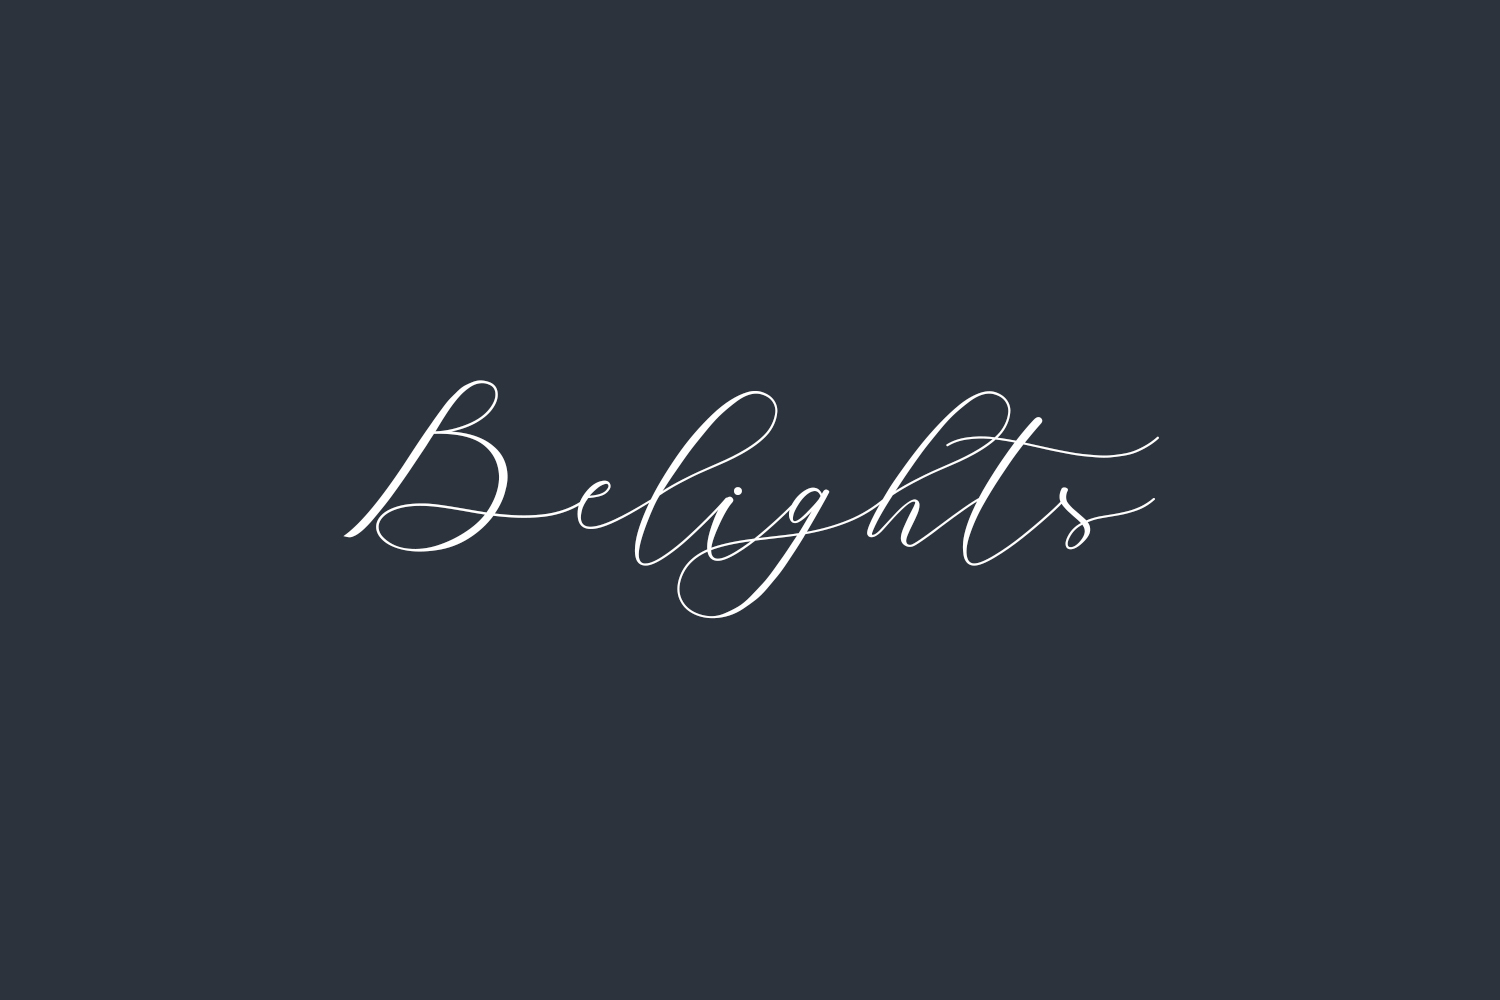 Belights Free Font